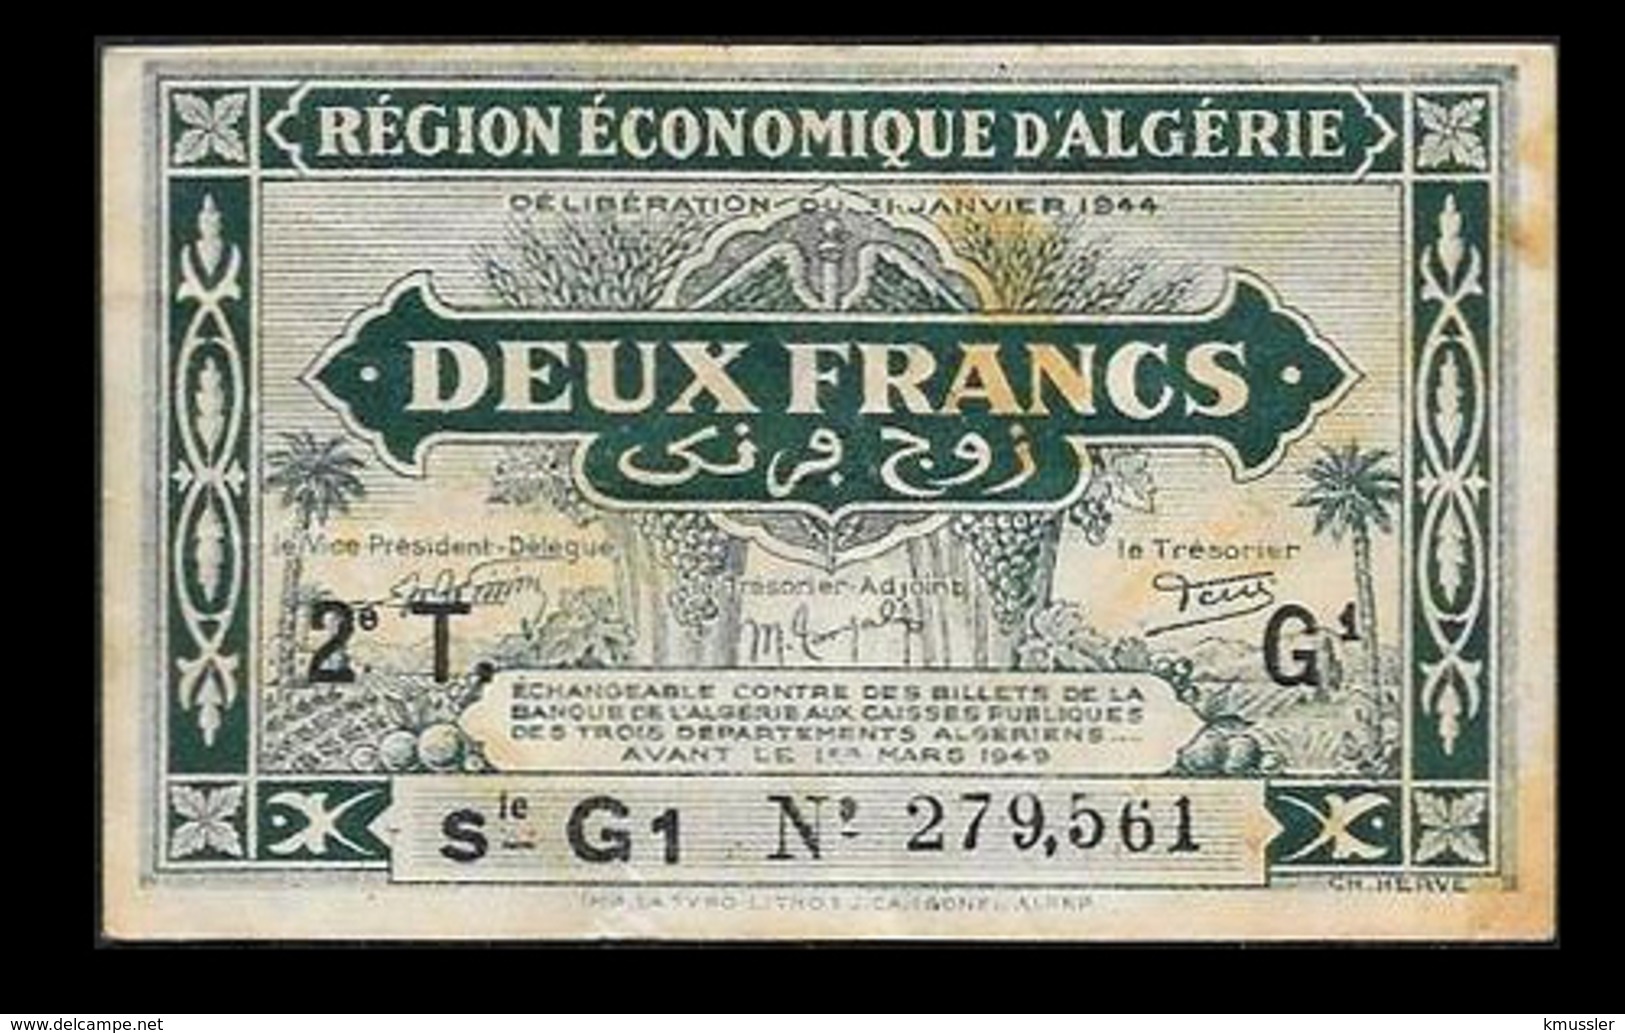 # # # Banknote Algerien (Algeria) 2 Francs 1949 # # # - Algerien